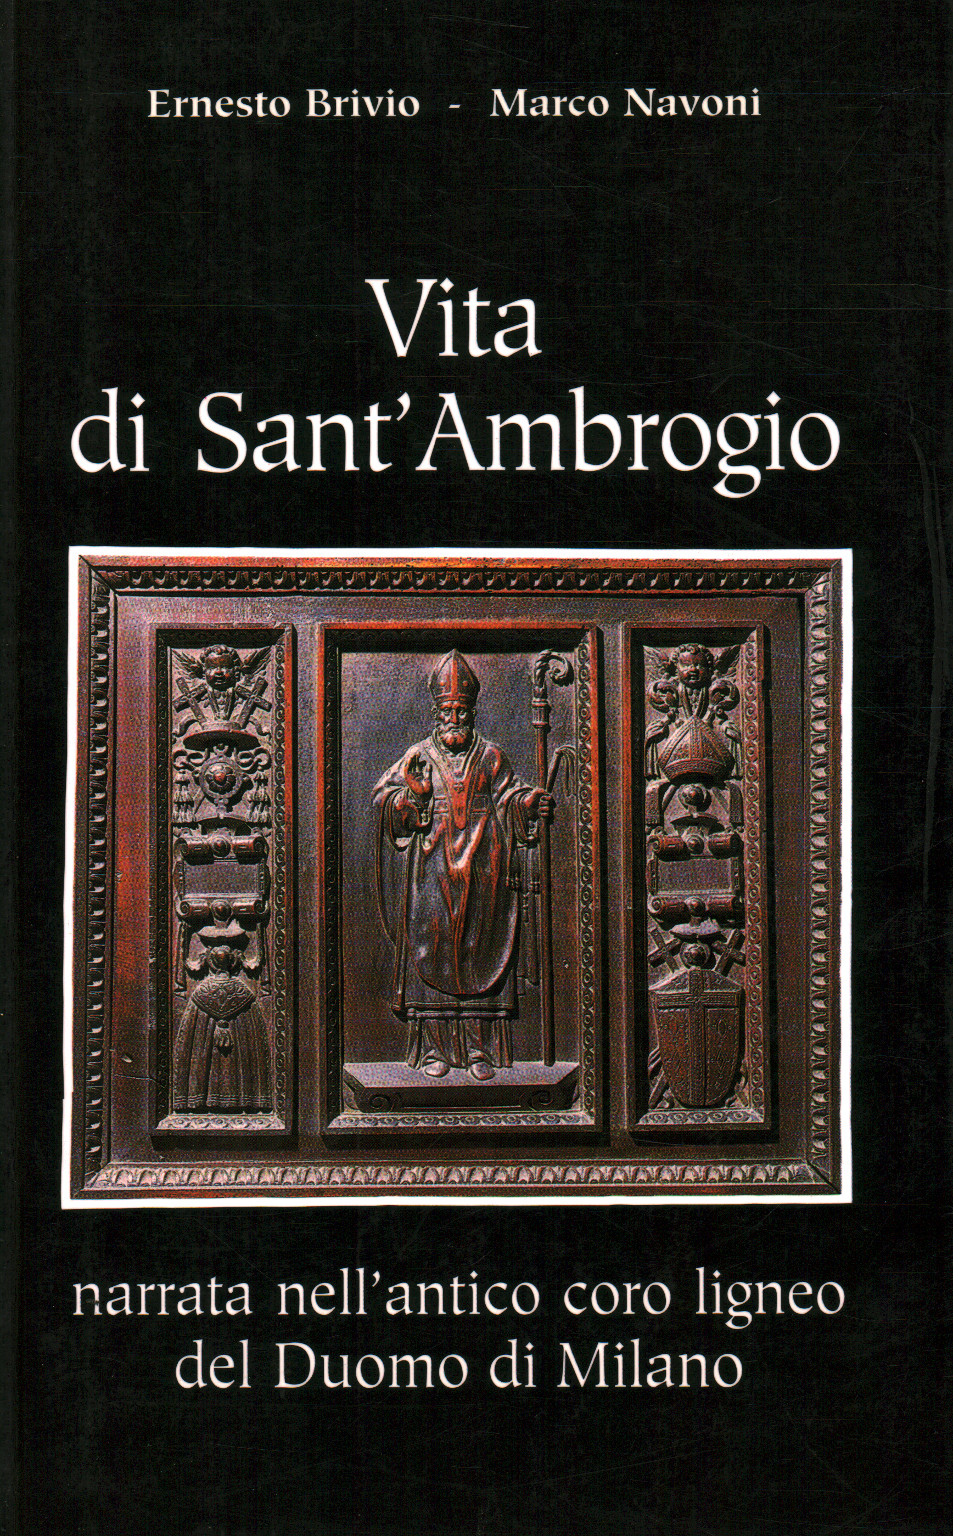 Life of Saint Ambrose, Ernesto Brivio Marco Navoni